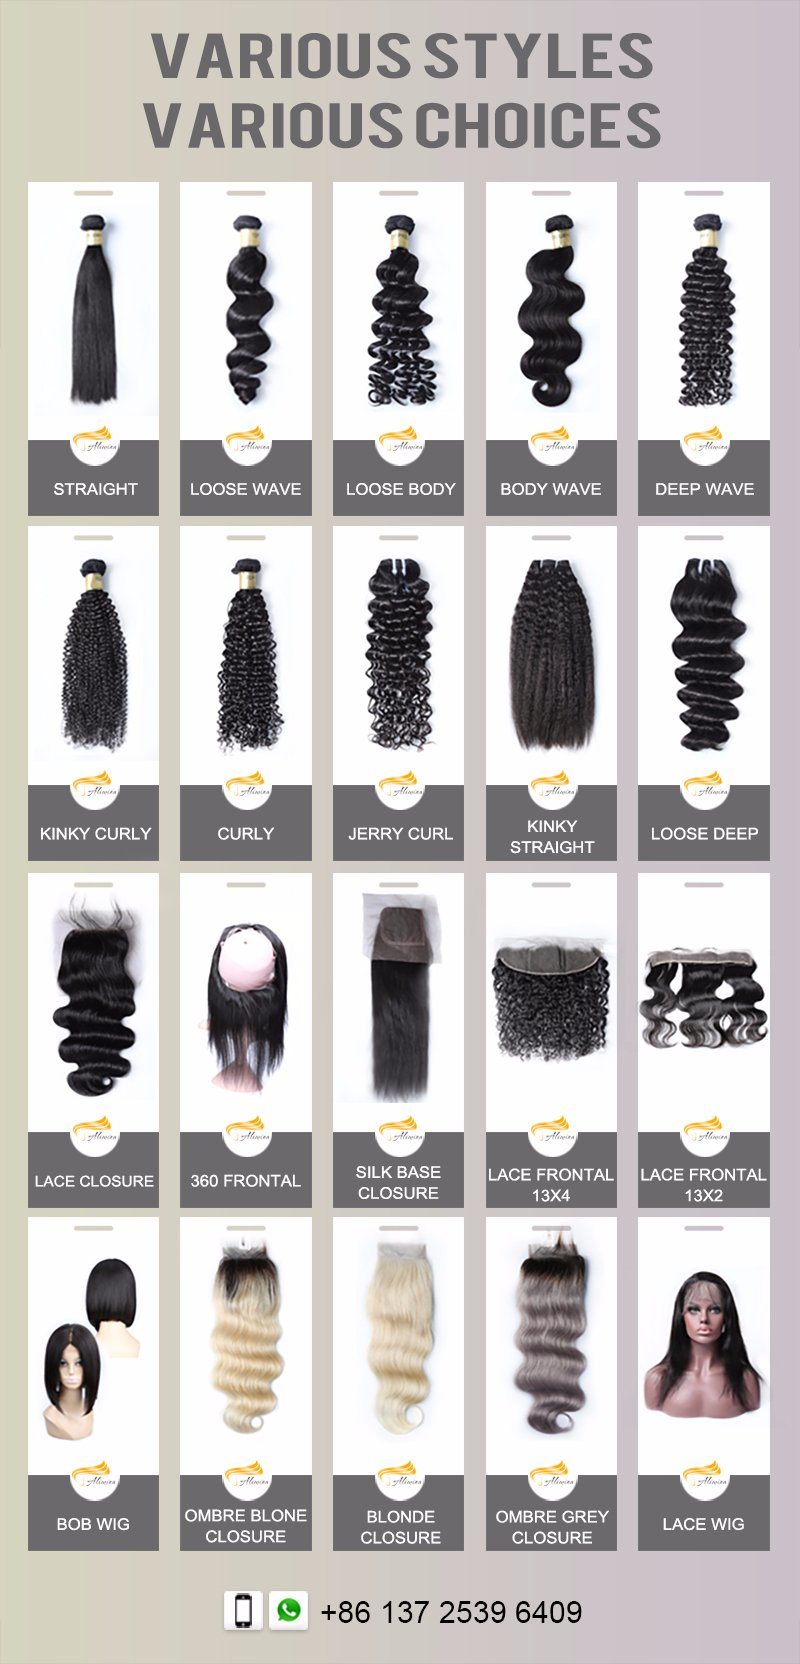 Natural Black Human Hair Brazilian Straight Hair Wholesale